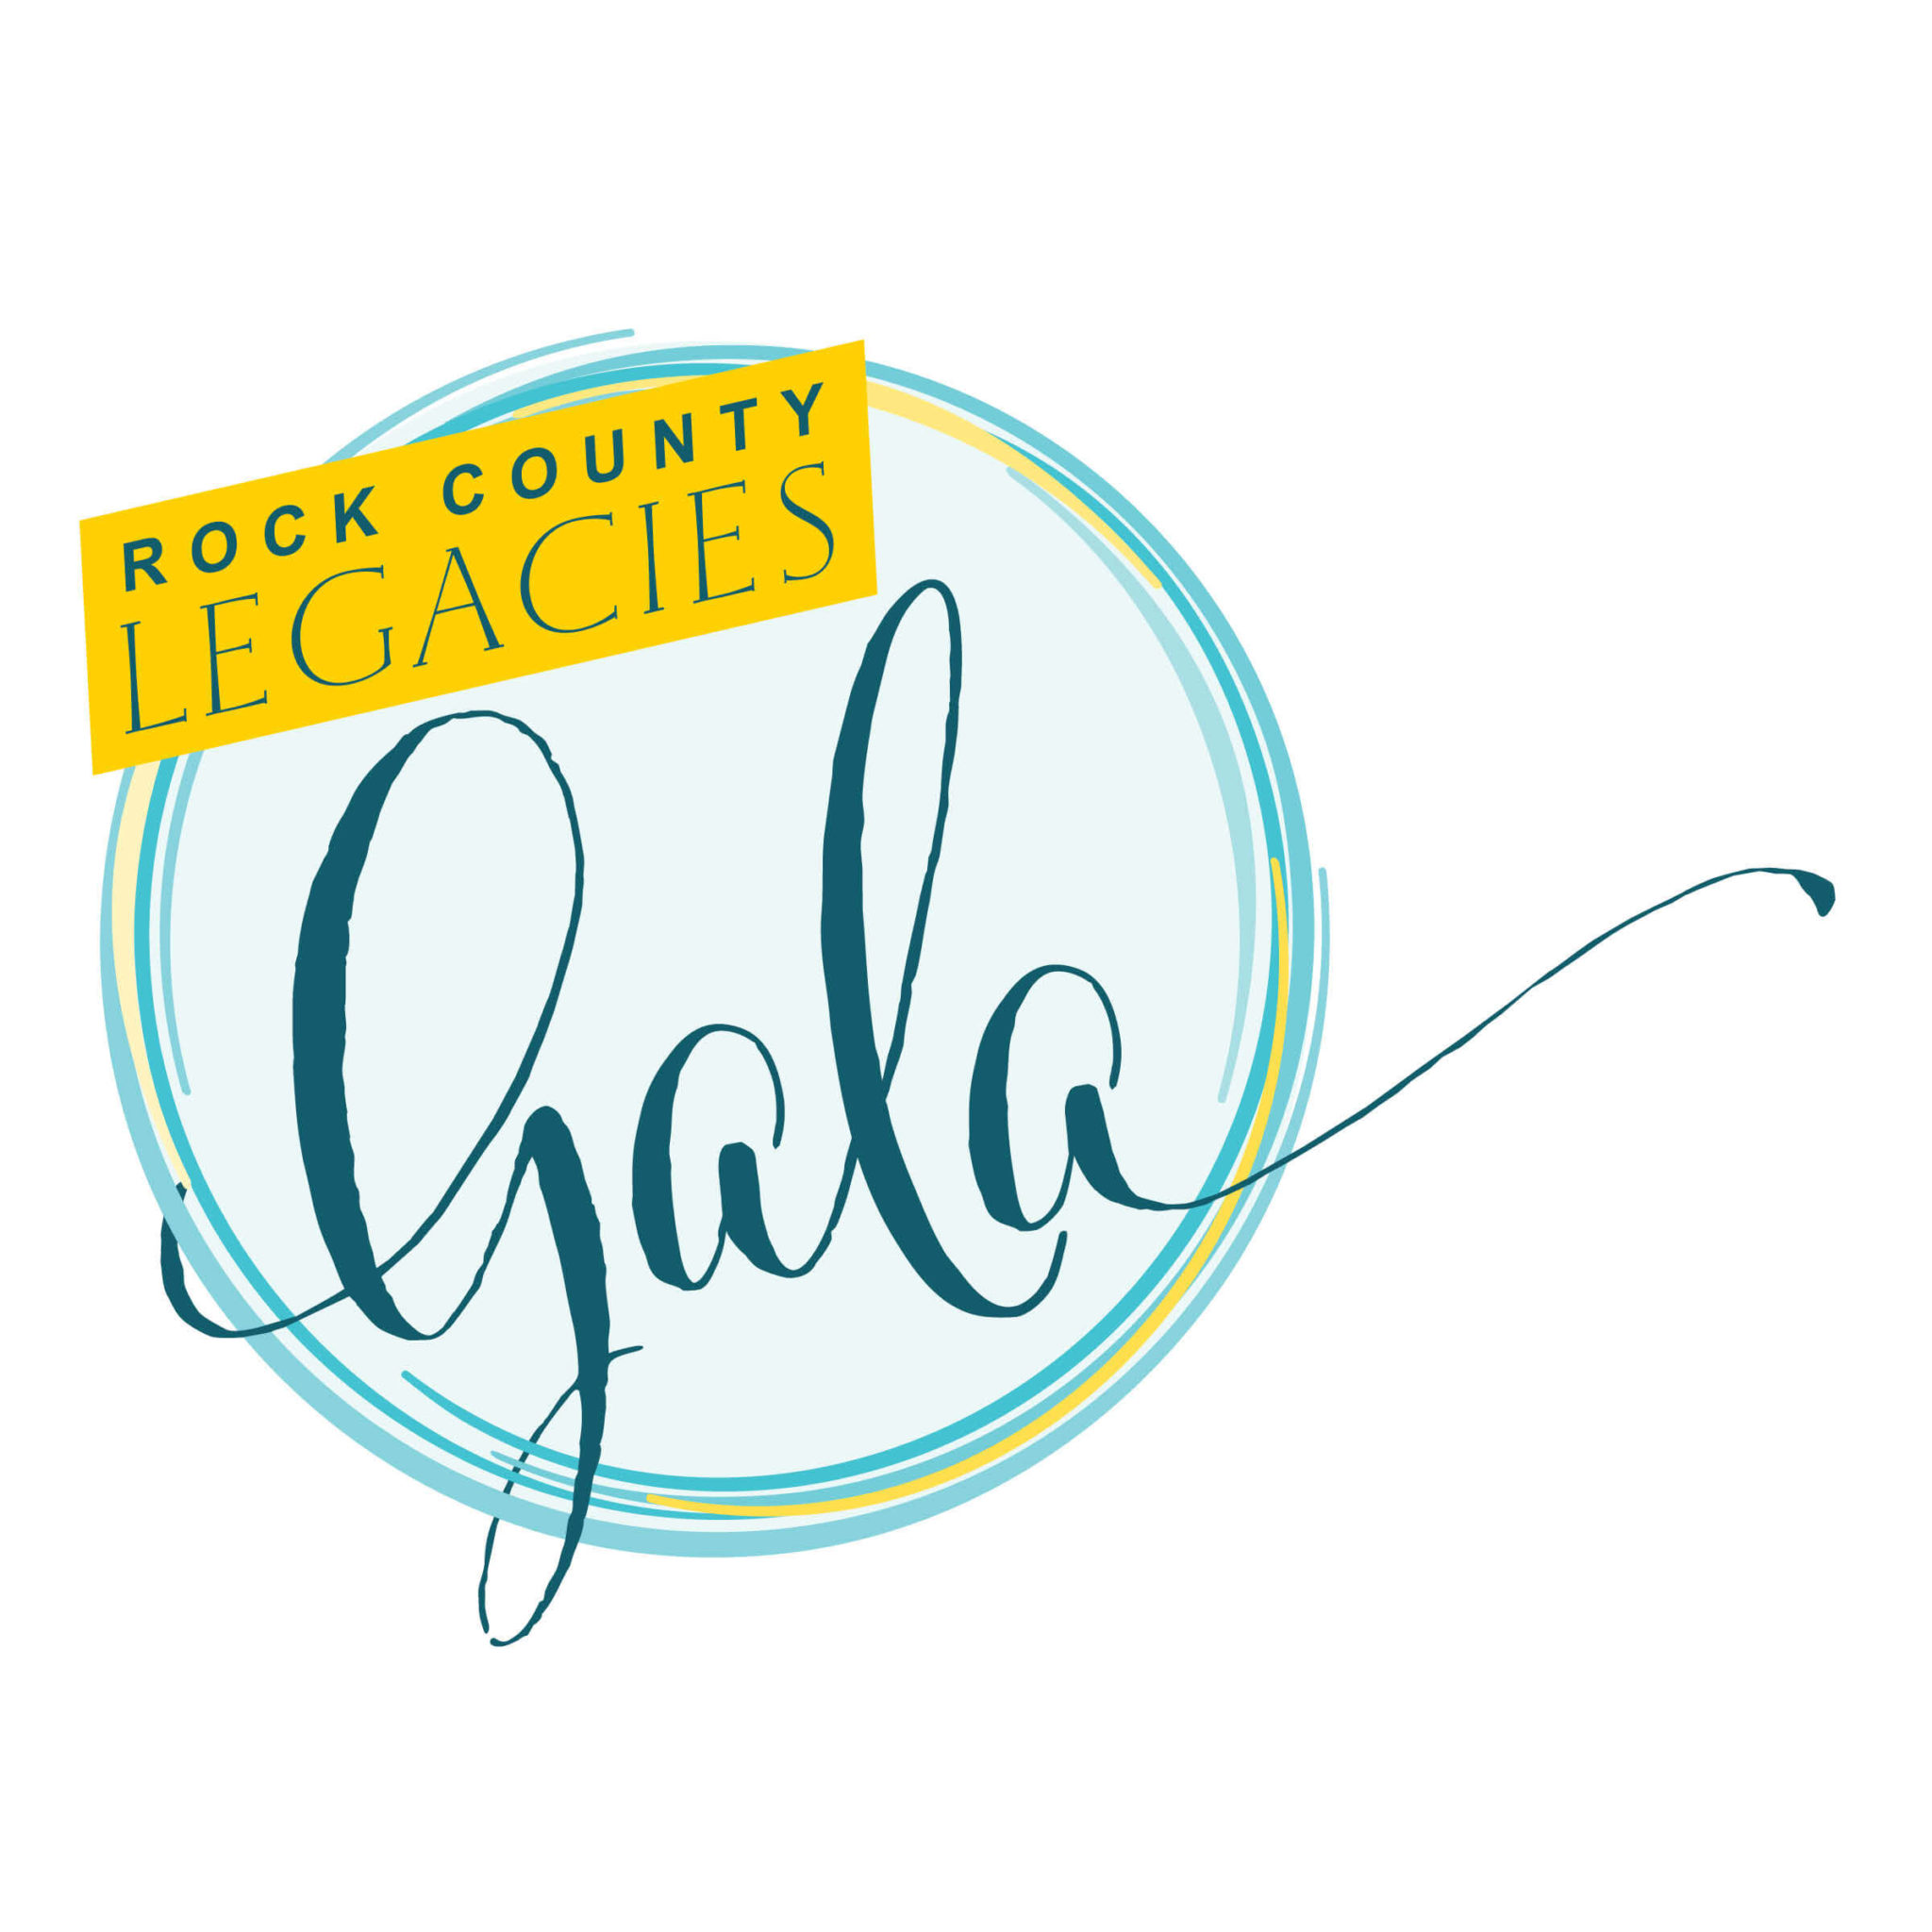 Rock County Legacies Gala logo